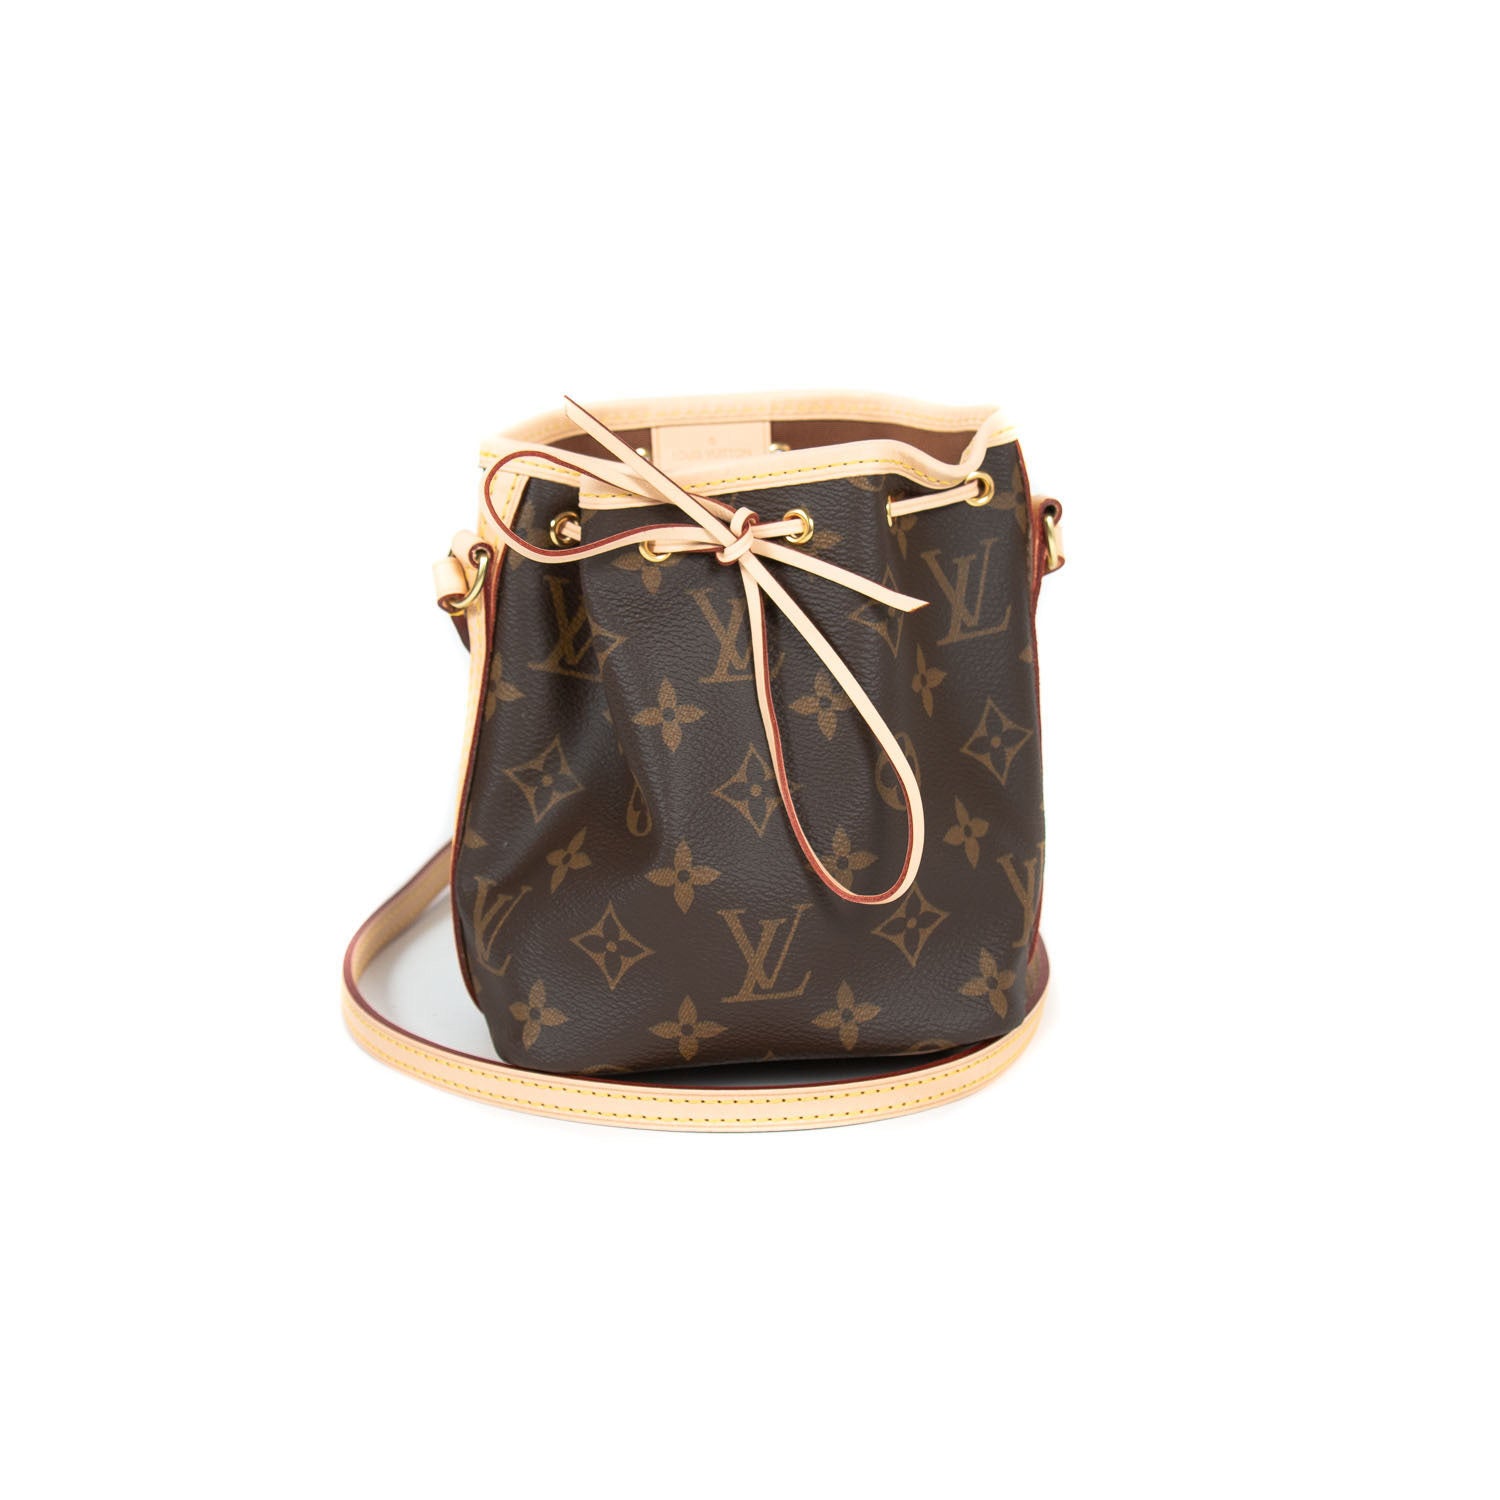 Nano Noe Monogram in Brown - Small Leather Goods M41346, L*V – ZAK BAGS ©️